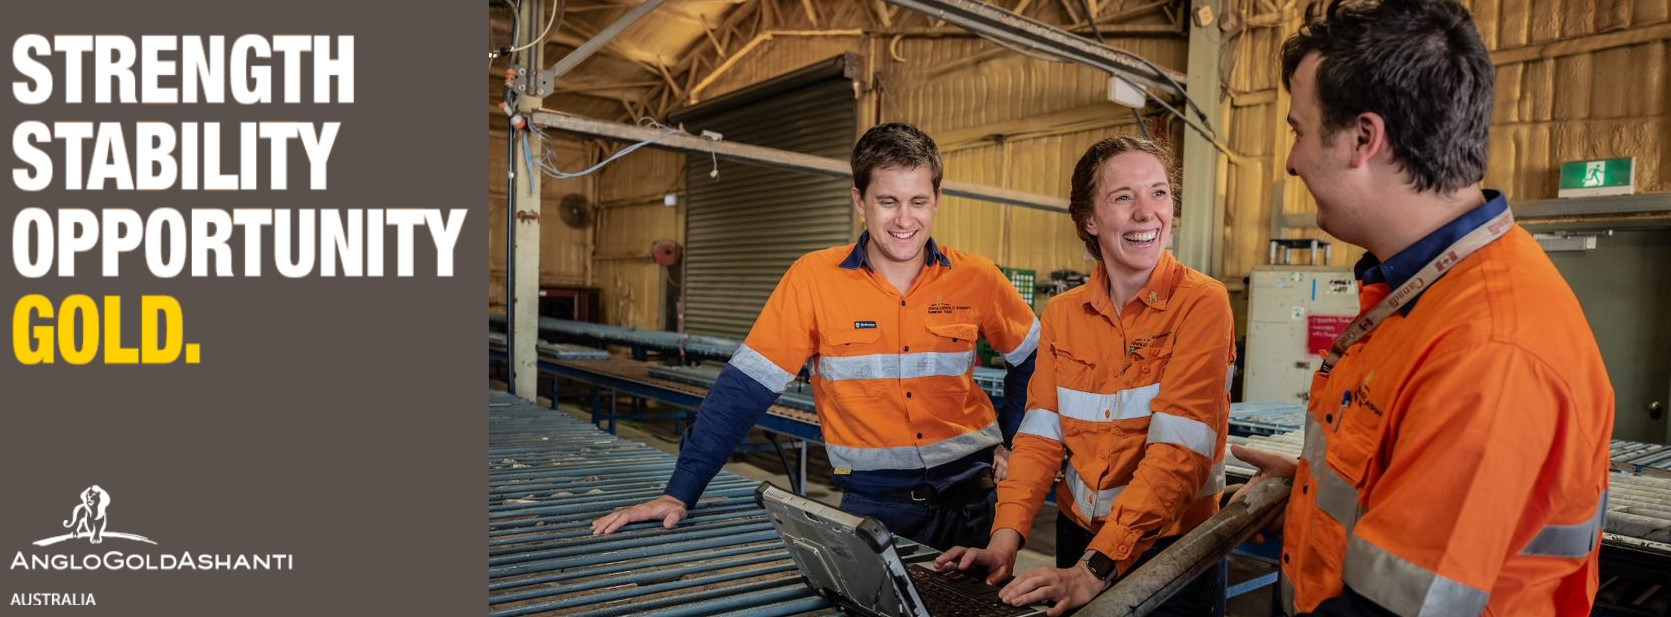 Graduate metallurgy jobs australia